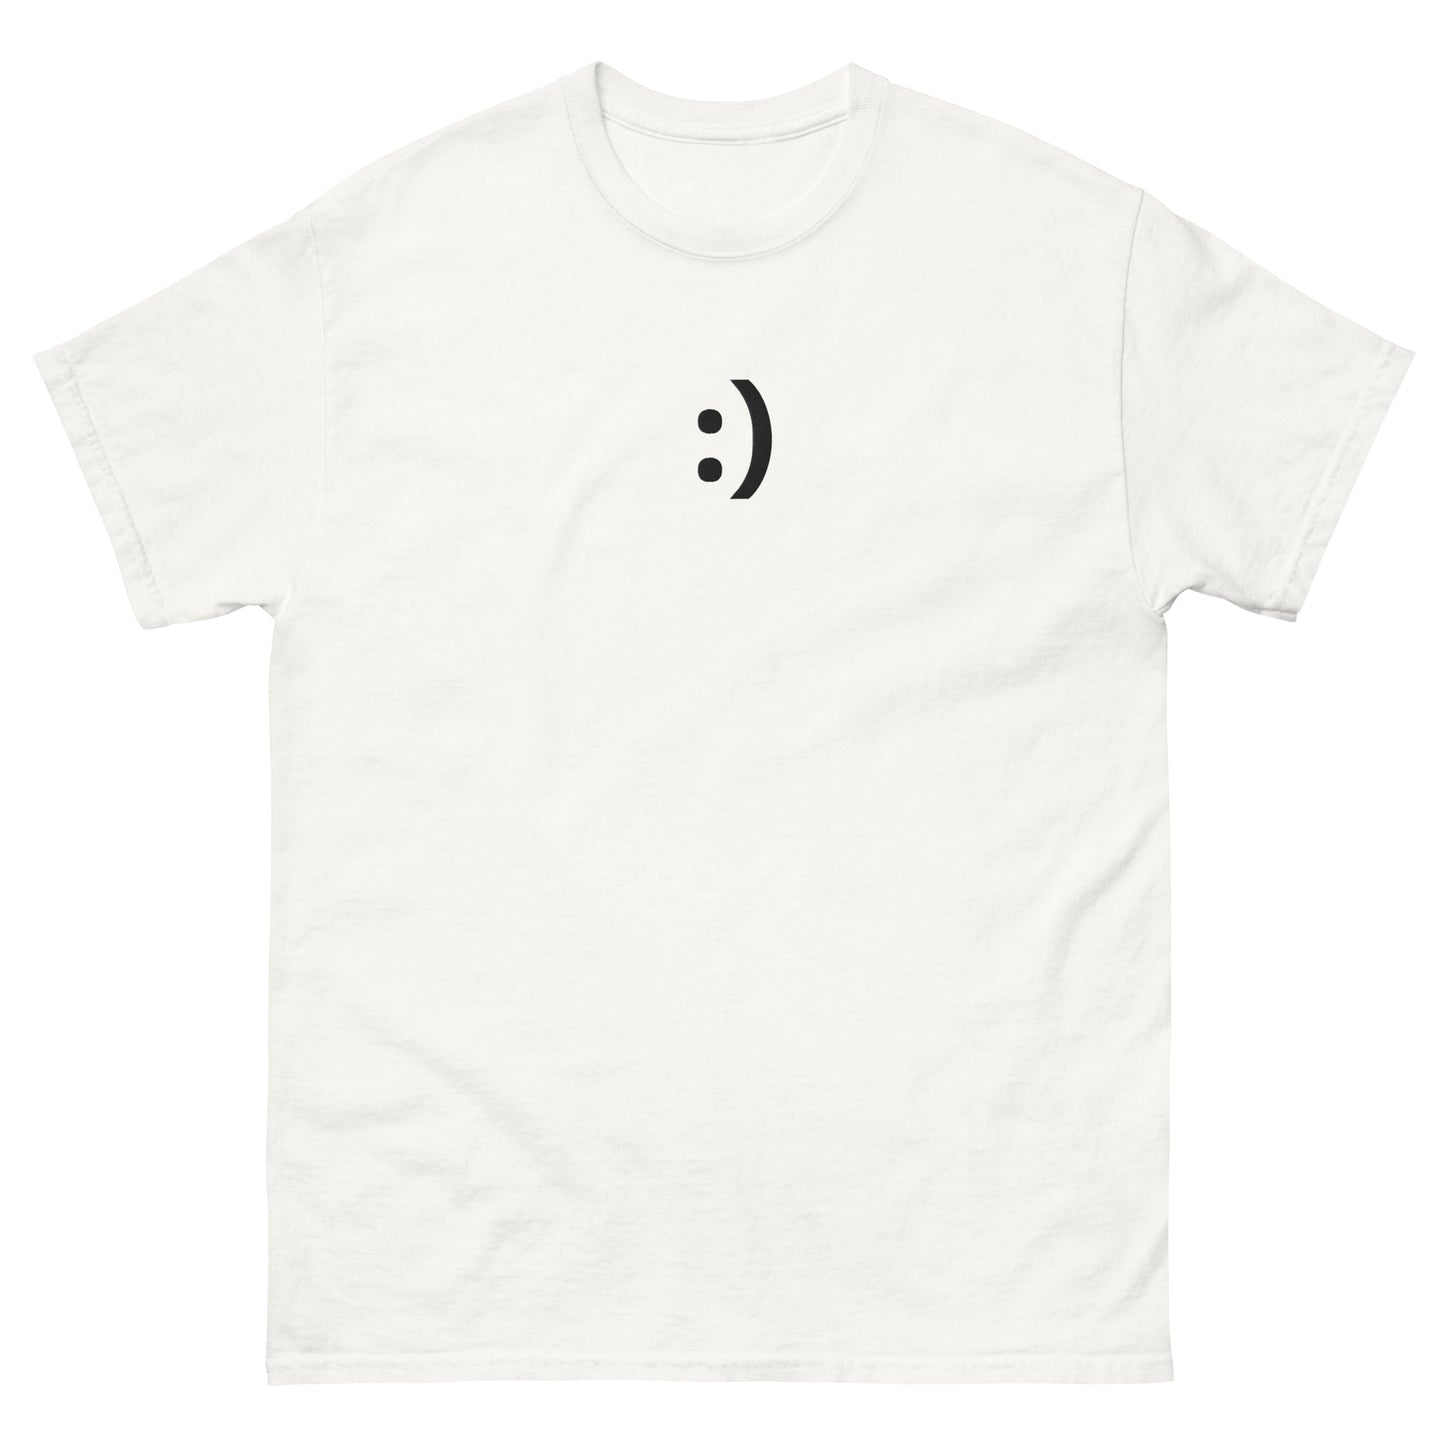 White :) | Happy Smiley Emoji Graphic T shirt for Men and Women - Emote IRL